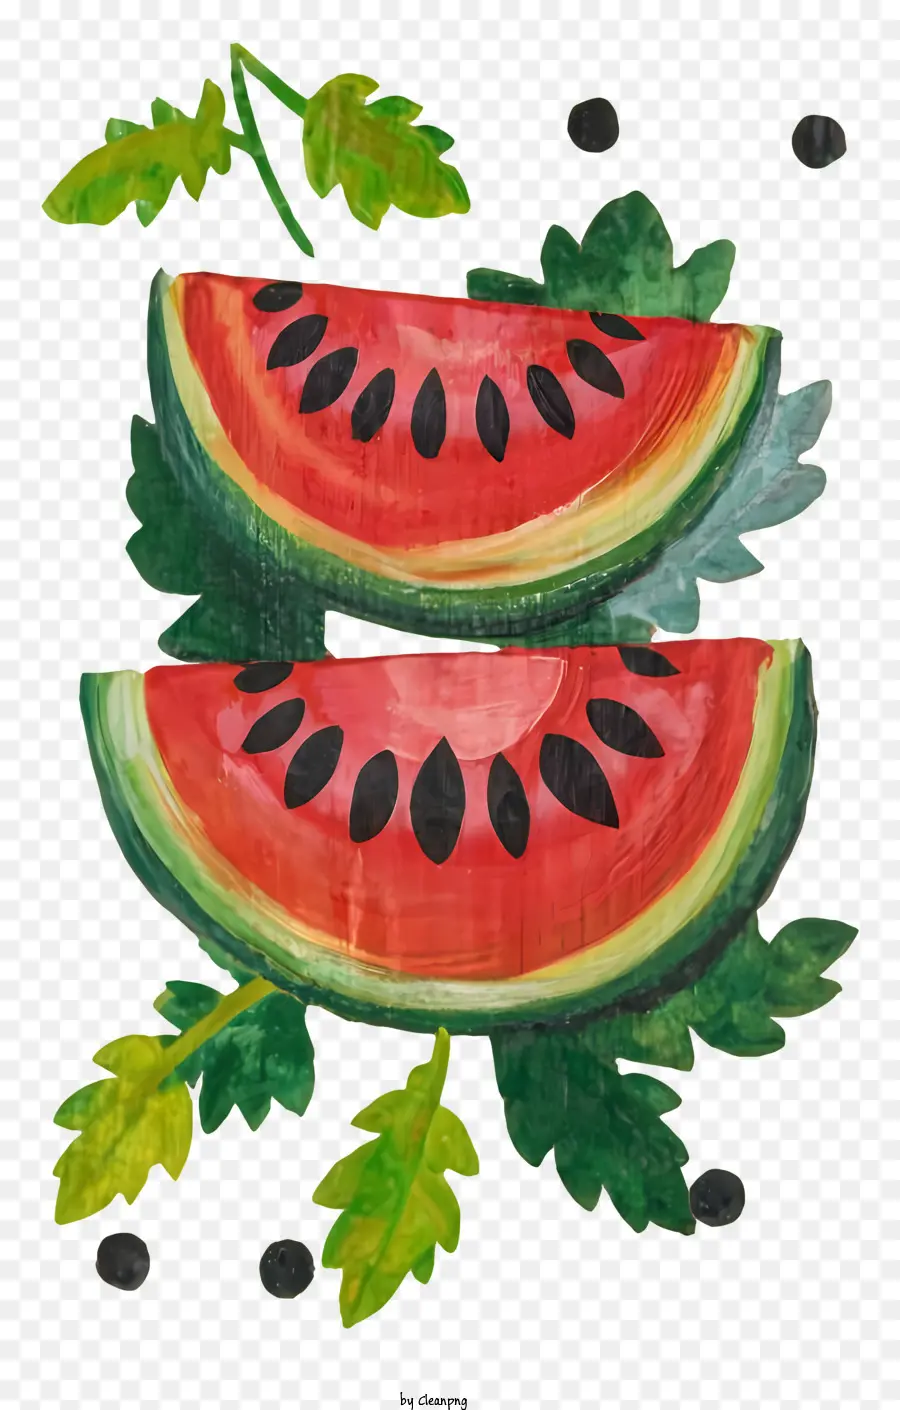 watermelon slices green leaves melon black surface fresh fruit